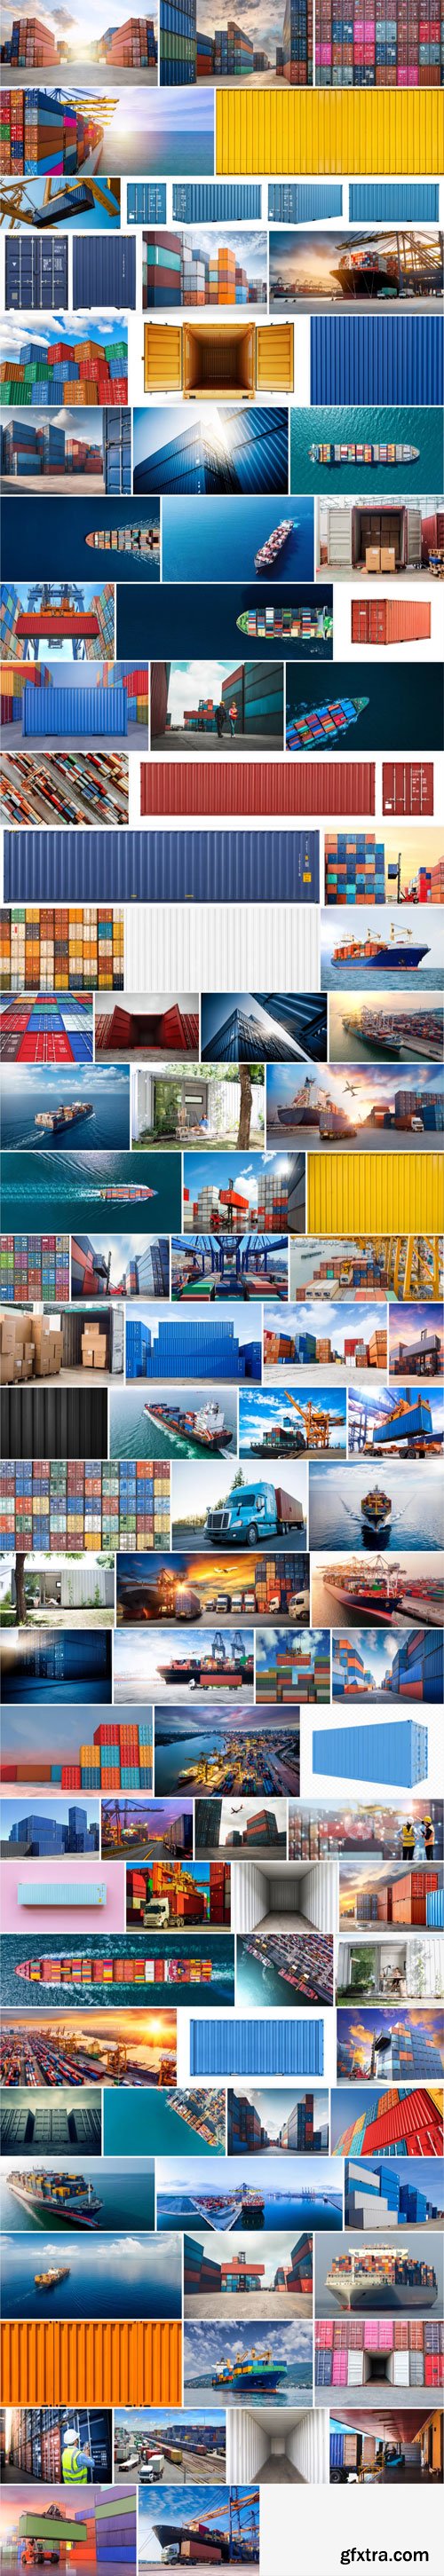 Stock Photos - Container